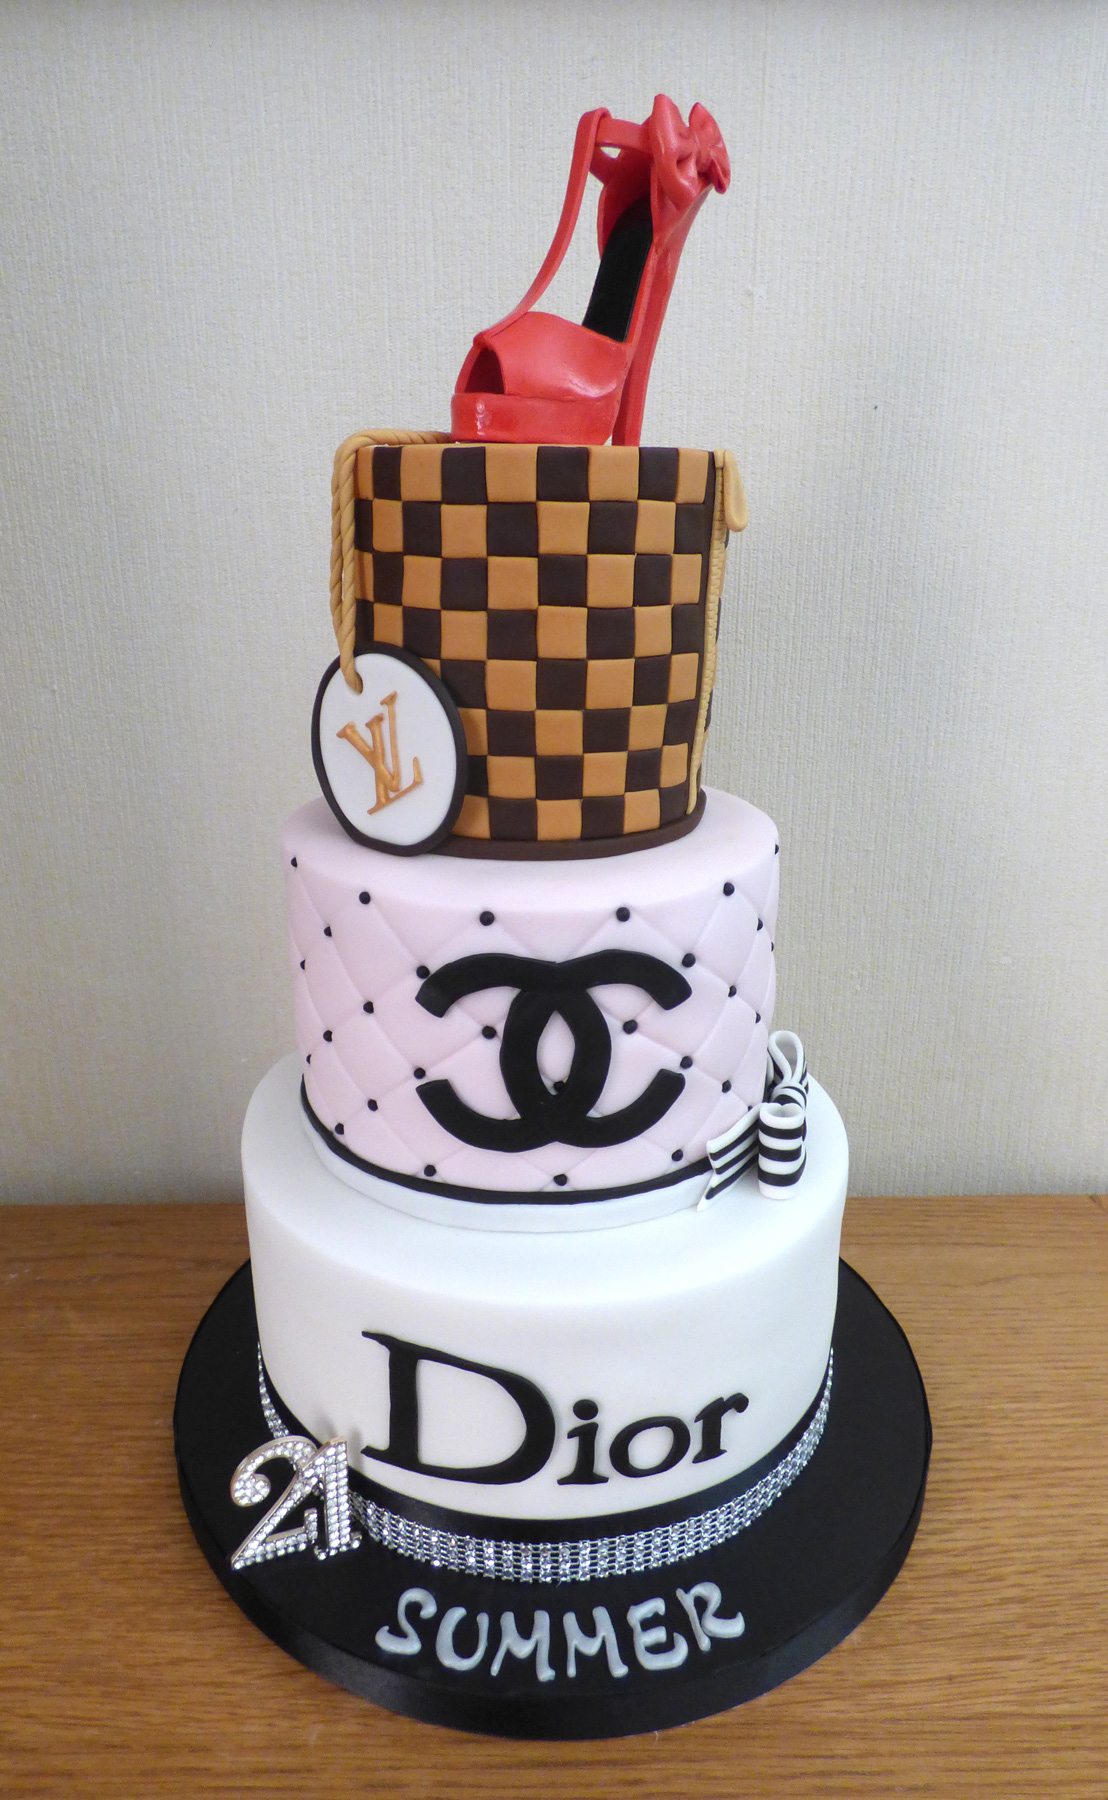 3 tier designer cake . Louis Vuitton high heel topper, Gucci top tier,  Chanel middle tier and Versace base tier . Cake Flavor: Wedding cake